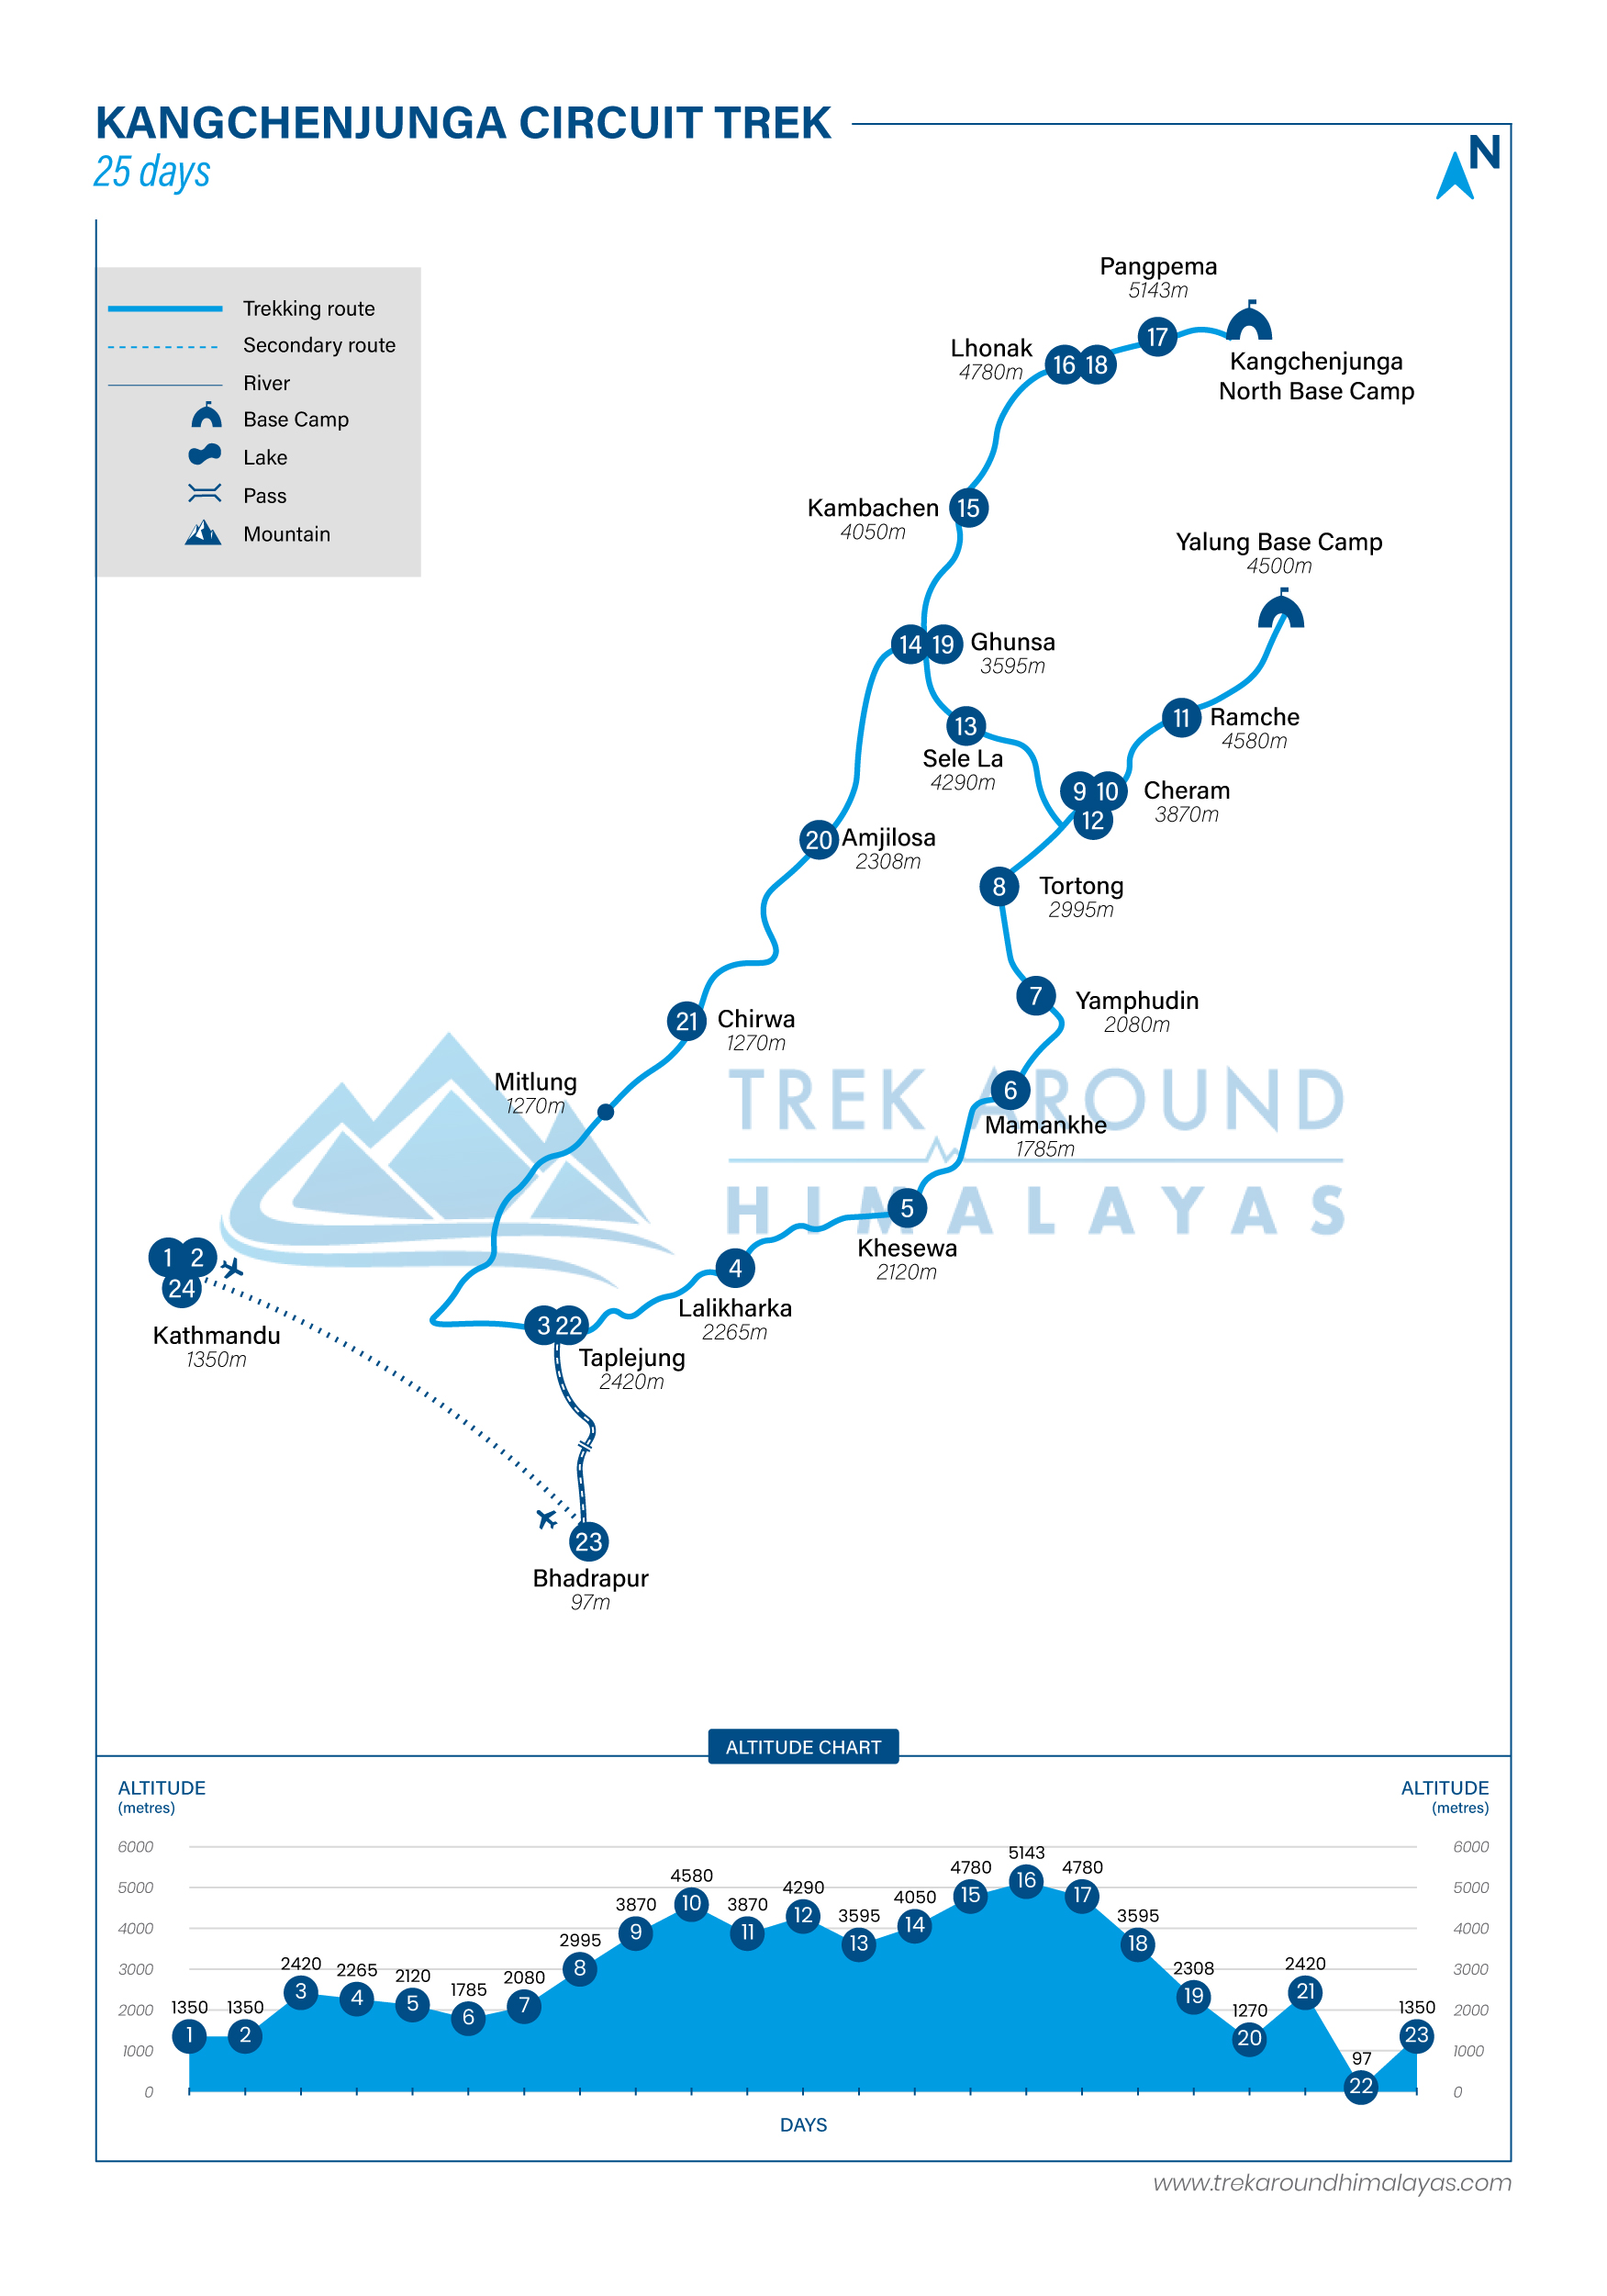 Route Map for Kanchenjunga Circuit Trek 25 days | Adventure Altitude